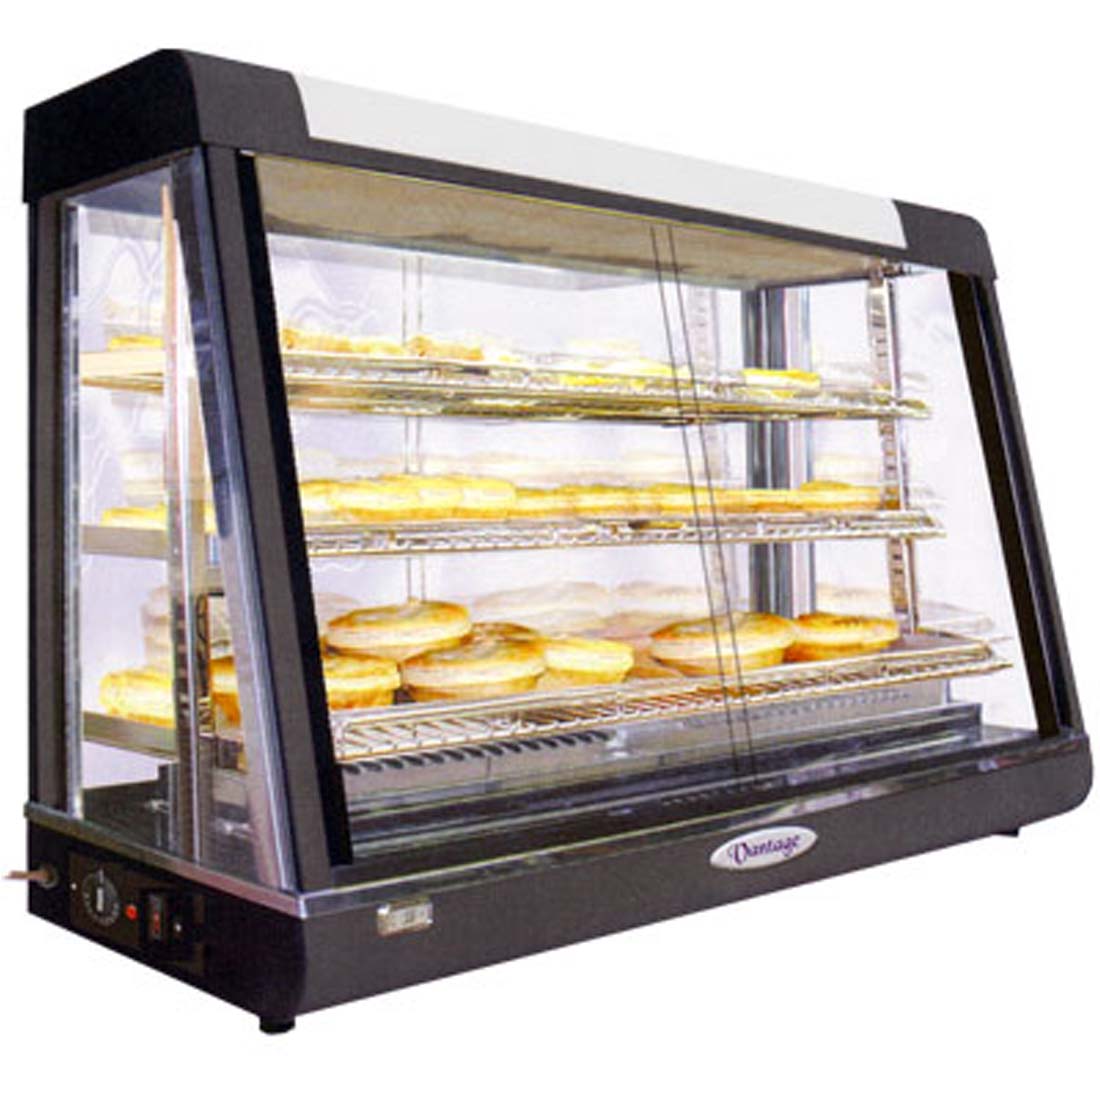 Benchstar Pie Warmer & Hot Food Display - PW-RT/1200/1 